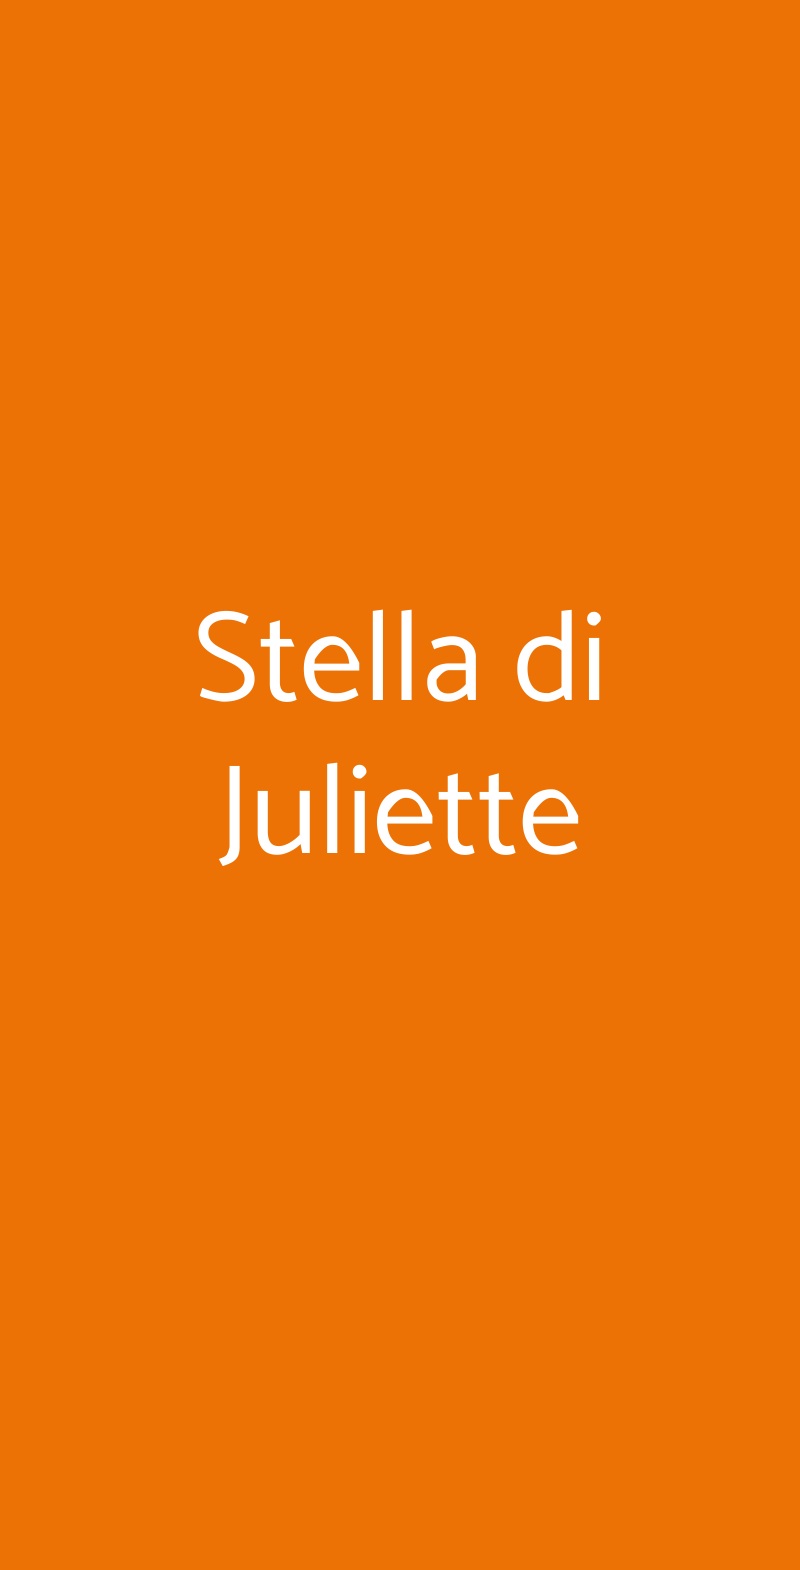 Stella di Juliette Milano menù 1 pagina